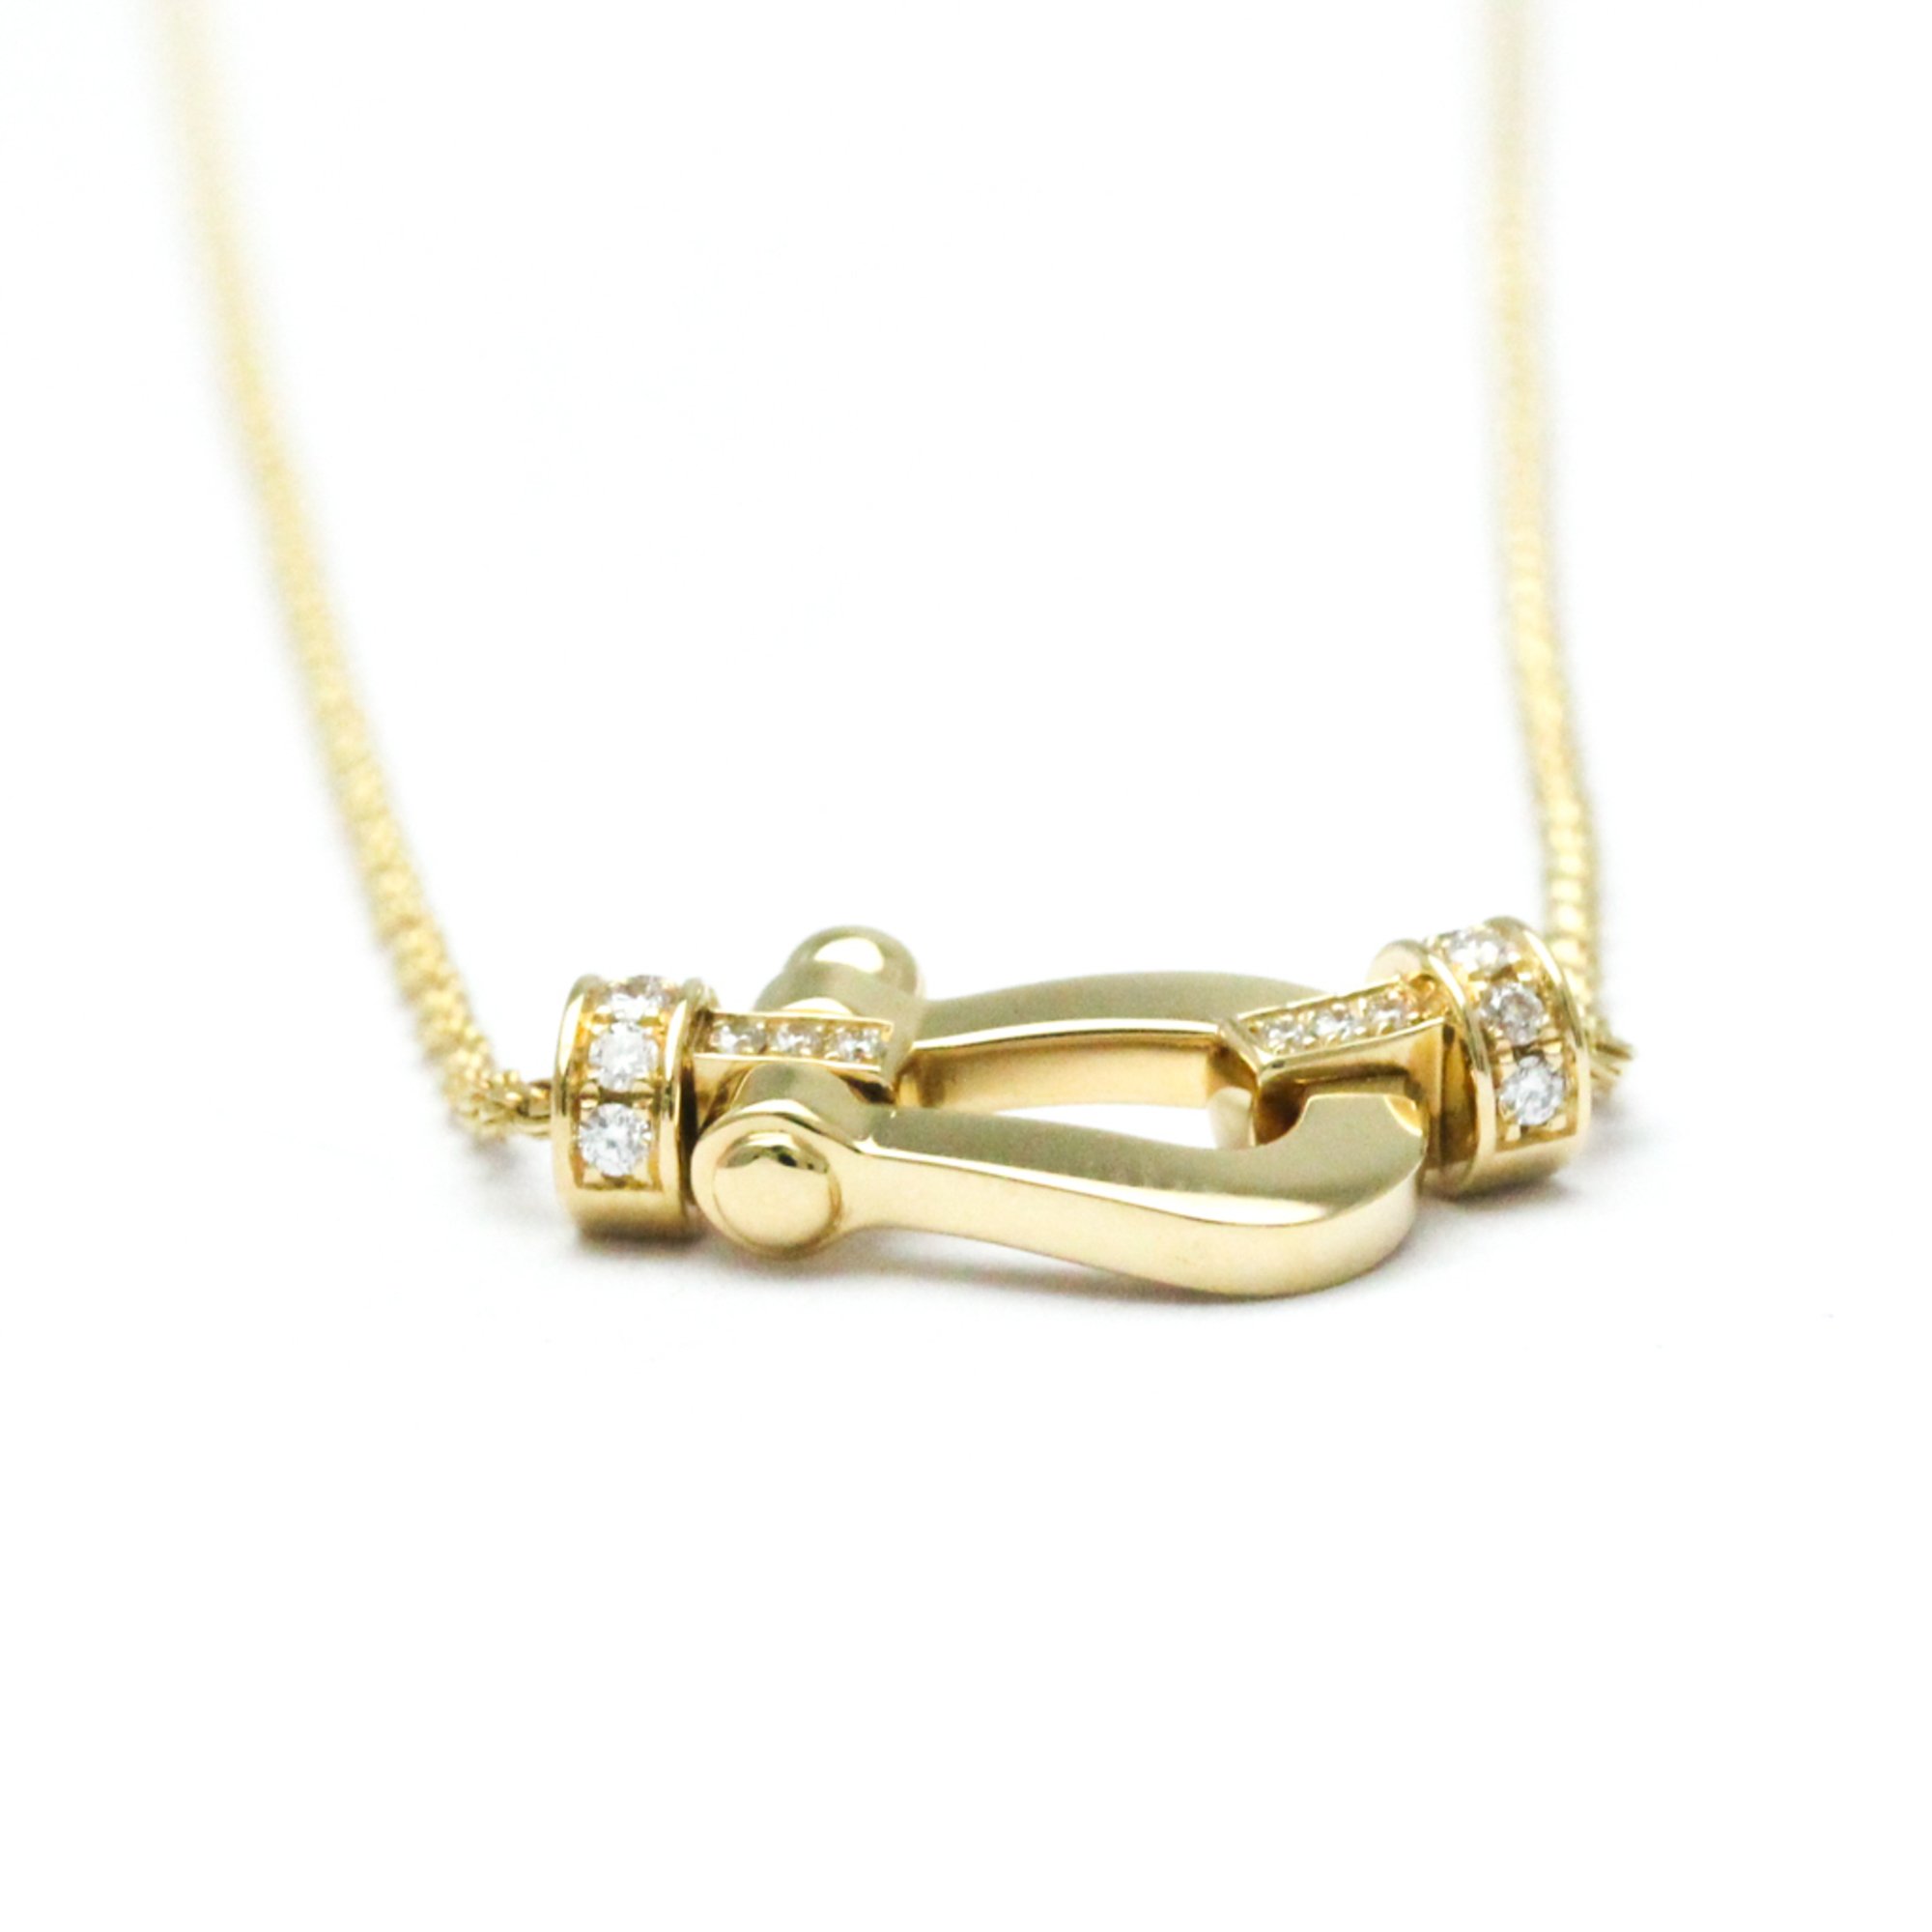 Fred Force 10 Medium Model Diamond Necklace Yellow Gold (18K) Diamond Men,Women Fashion Pendant Necklace (Gold)